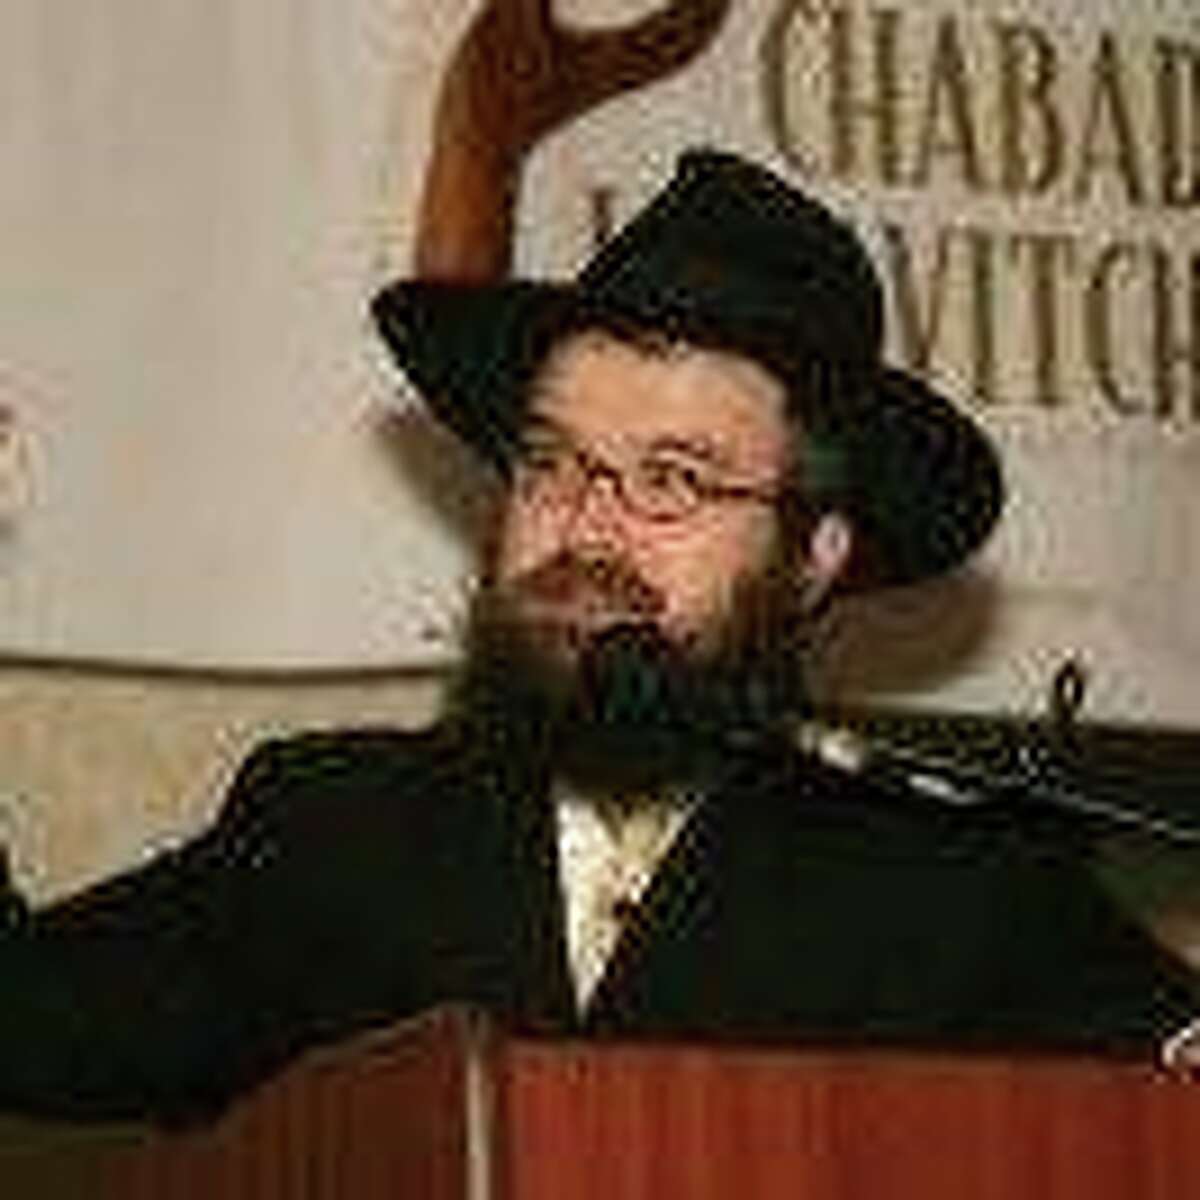 Rabbi Joseph Eisenbach leads Chabad of Litchfield County in Litchfield.